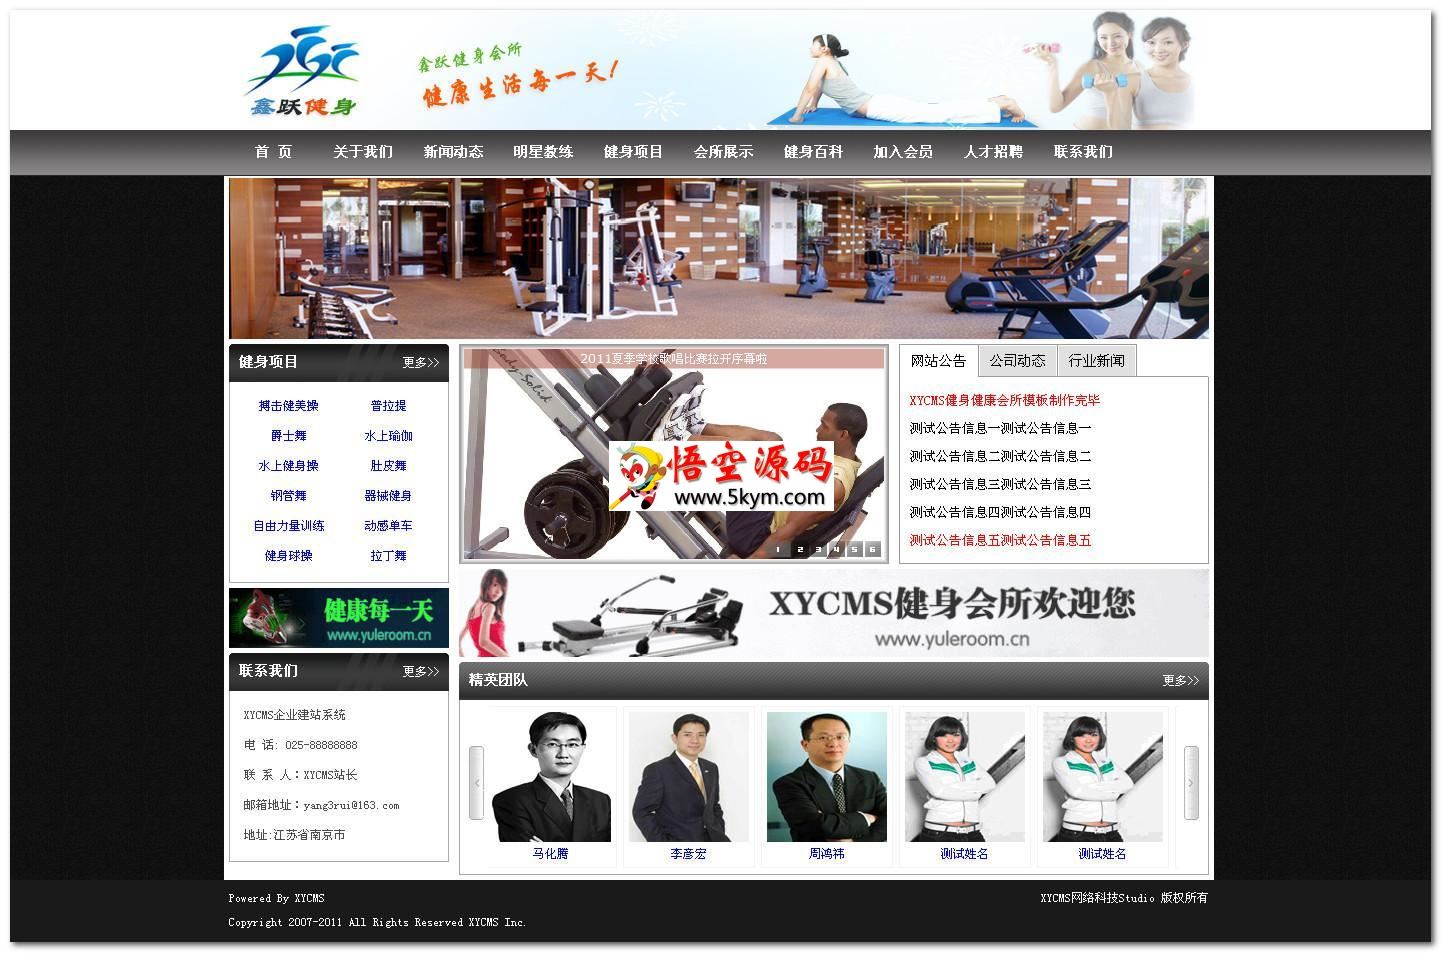 XYCMS健身会所网站模板 v1.1